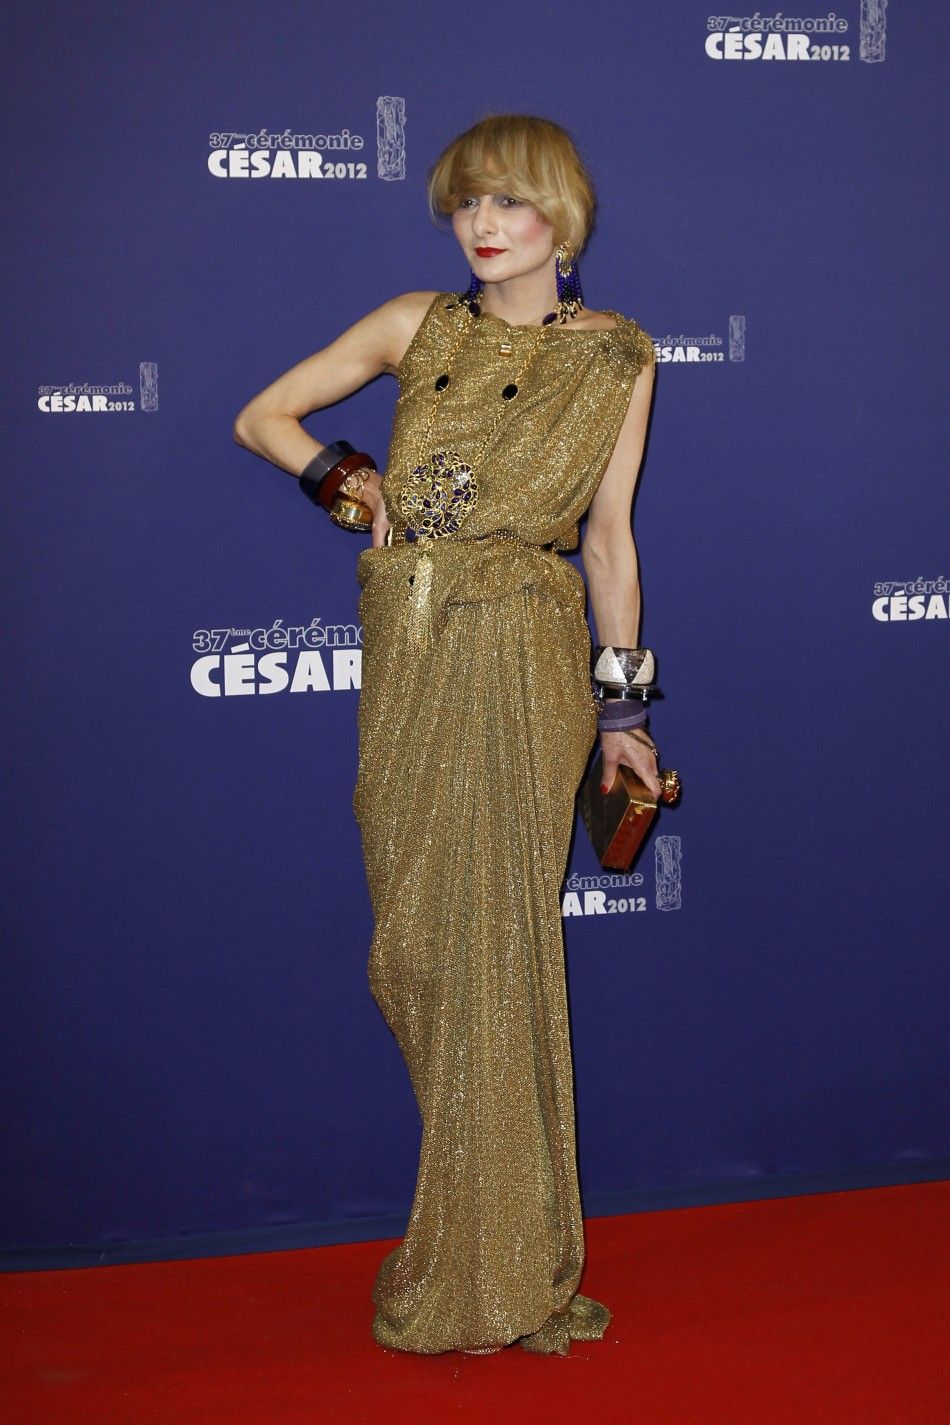 Cesar Awards 2012 Red Carpet